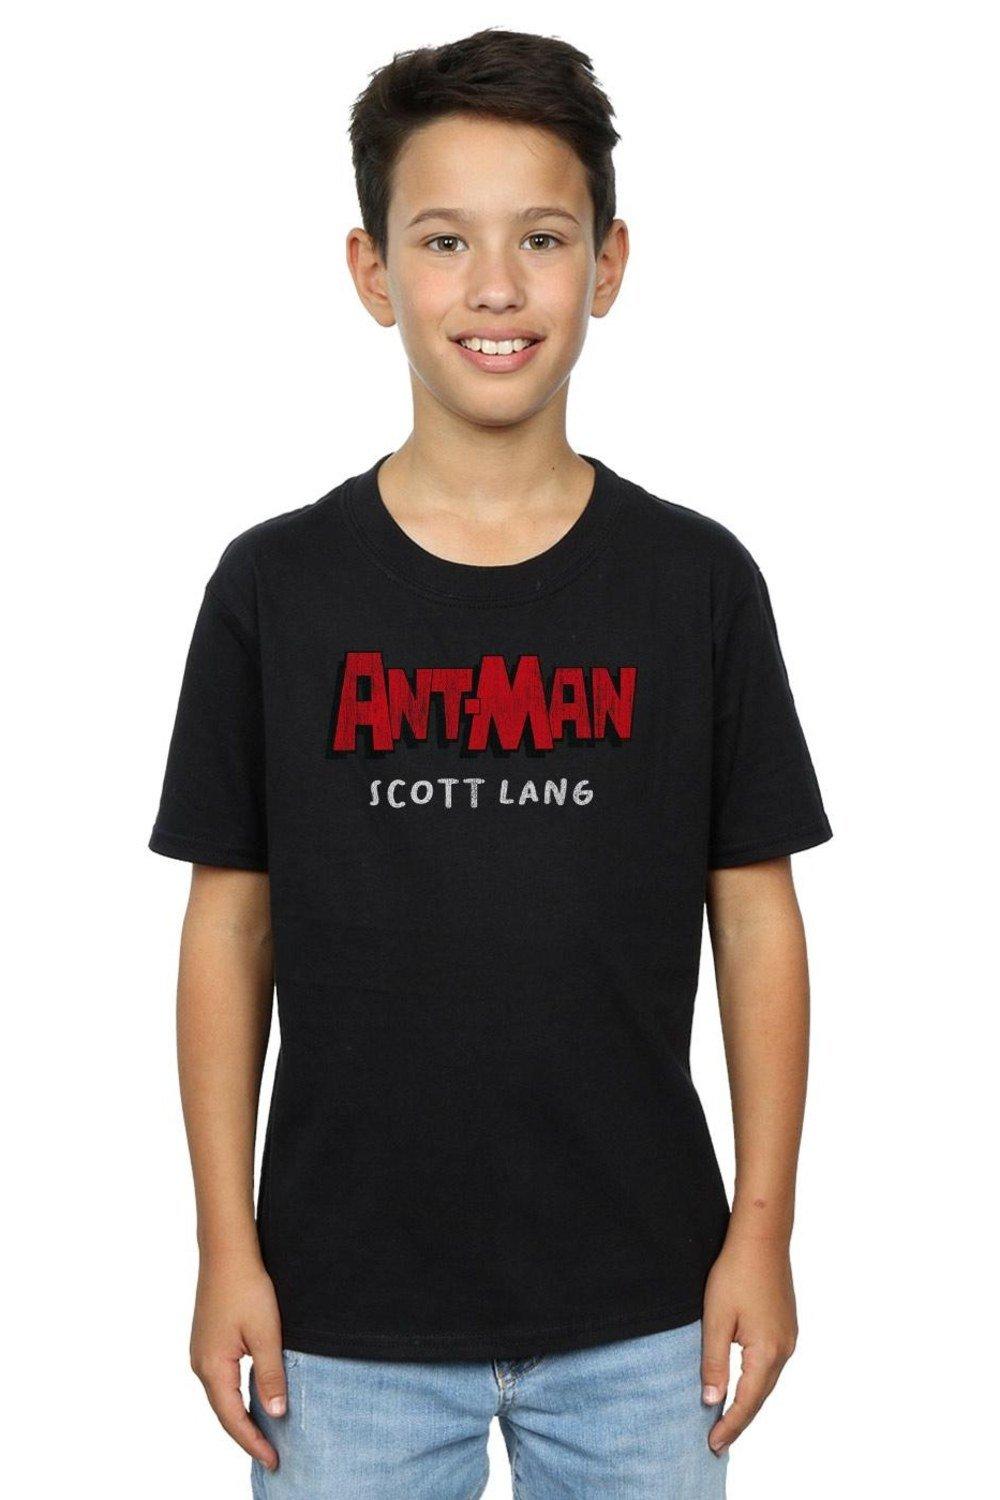 Ant-Man AKA Scott Lang T-Shirt